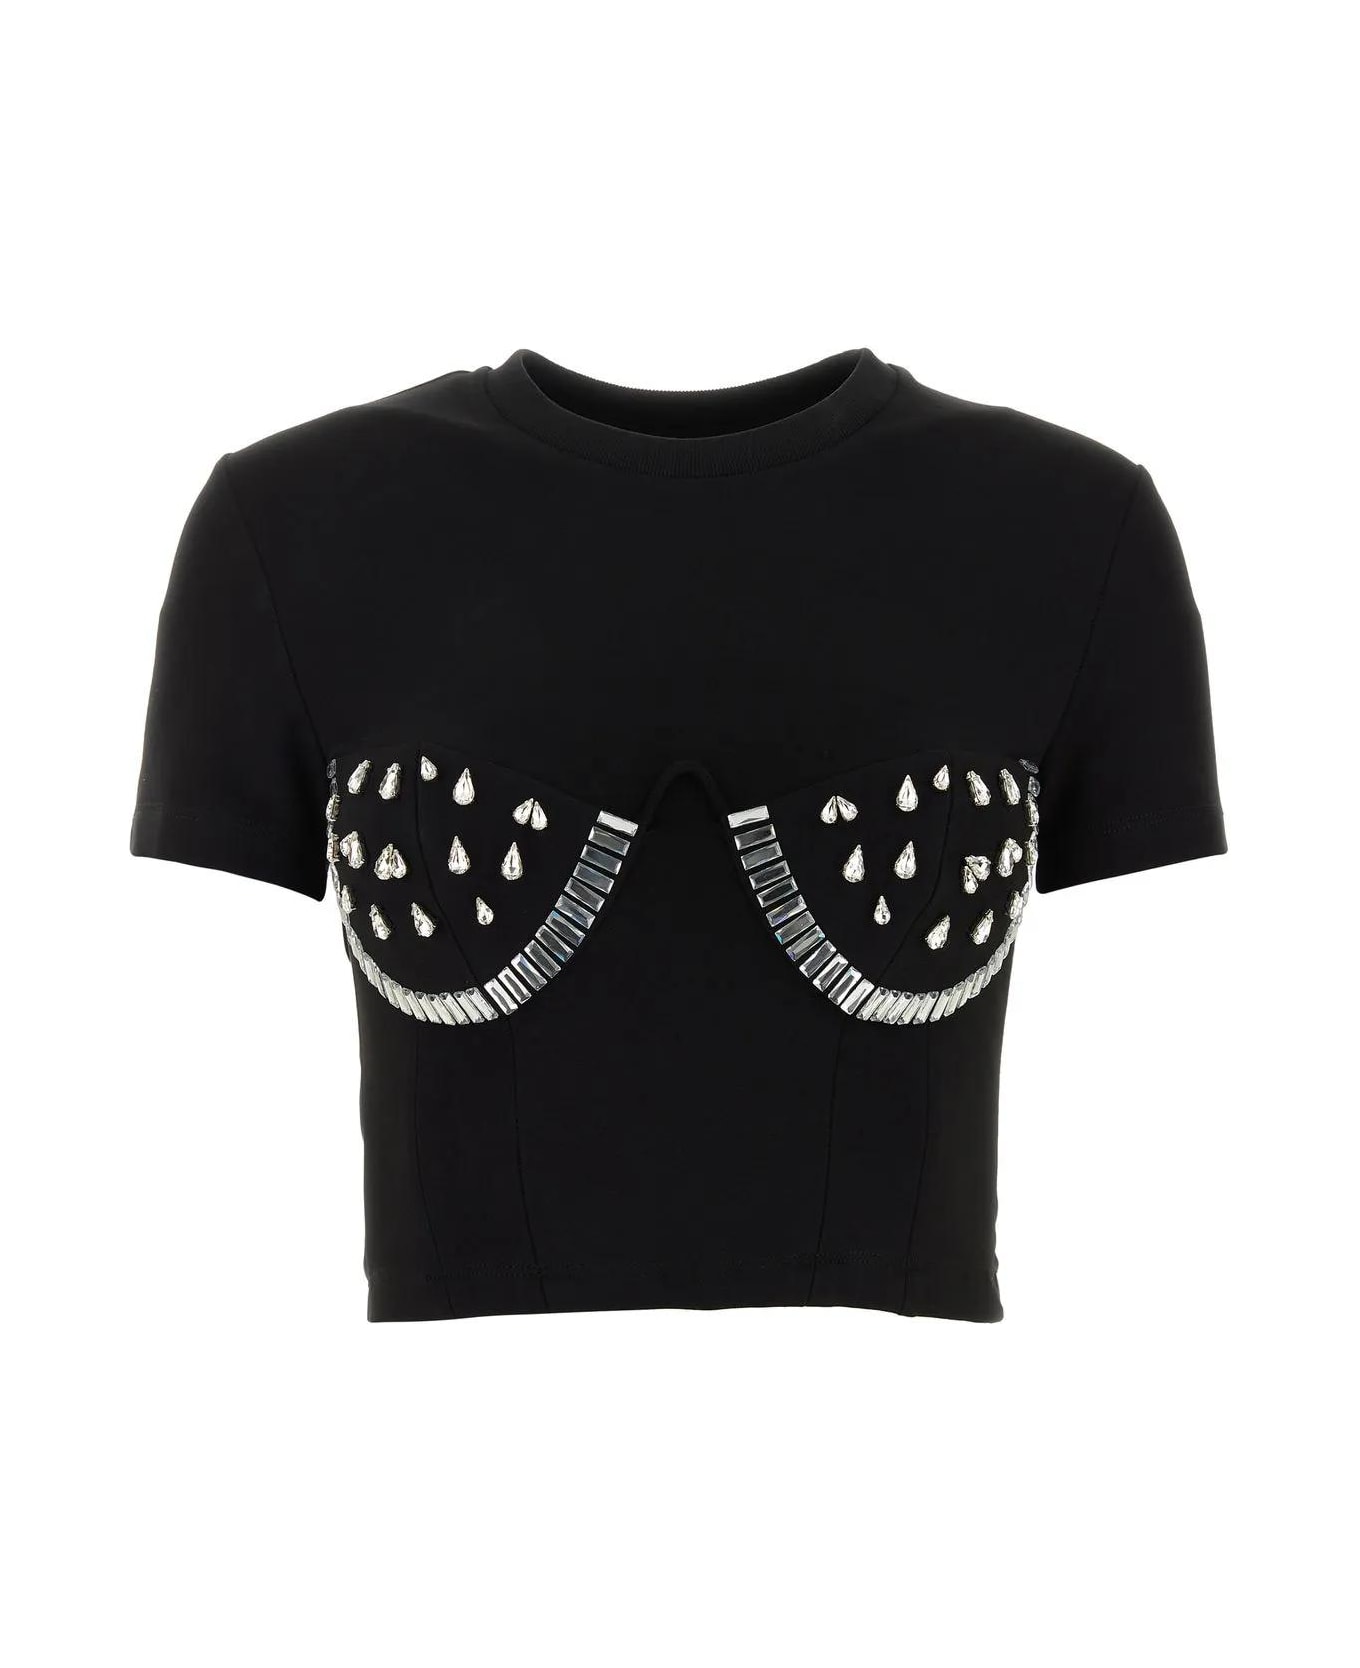 AREA Black Jersey T-shirt - Black